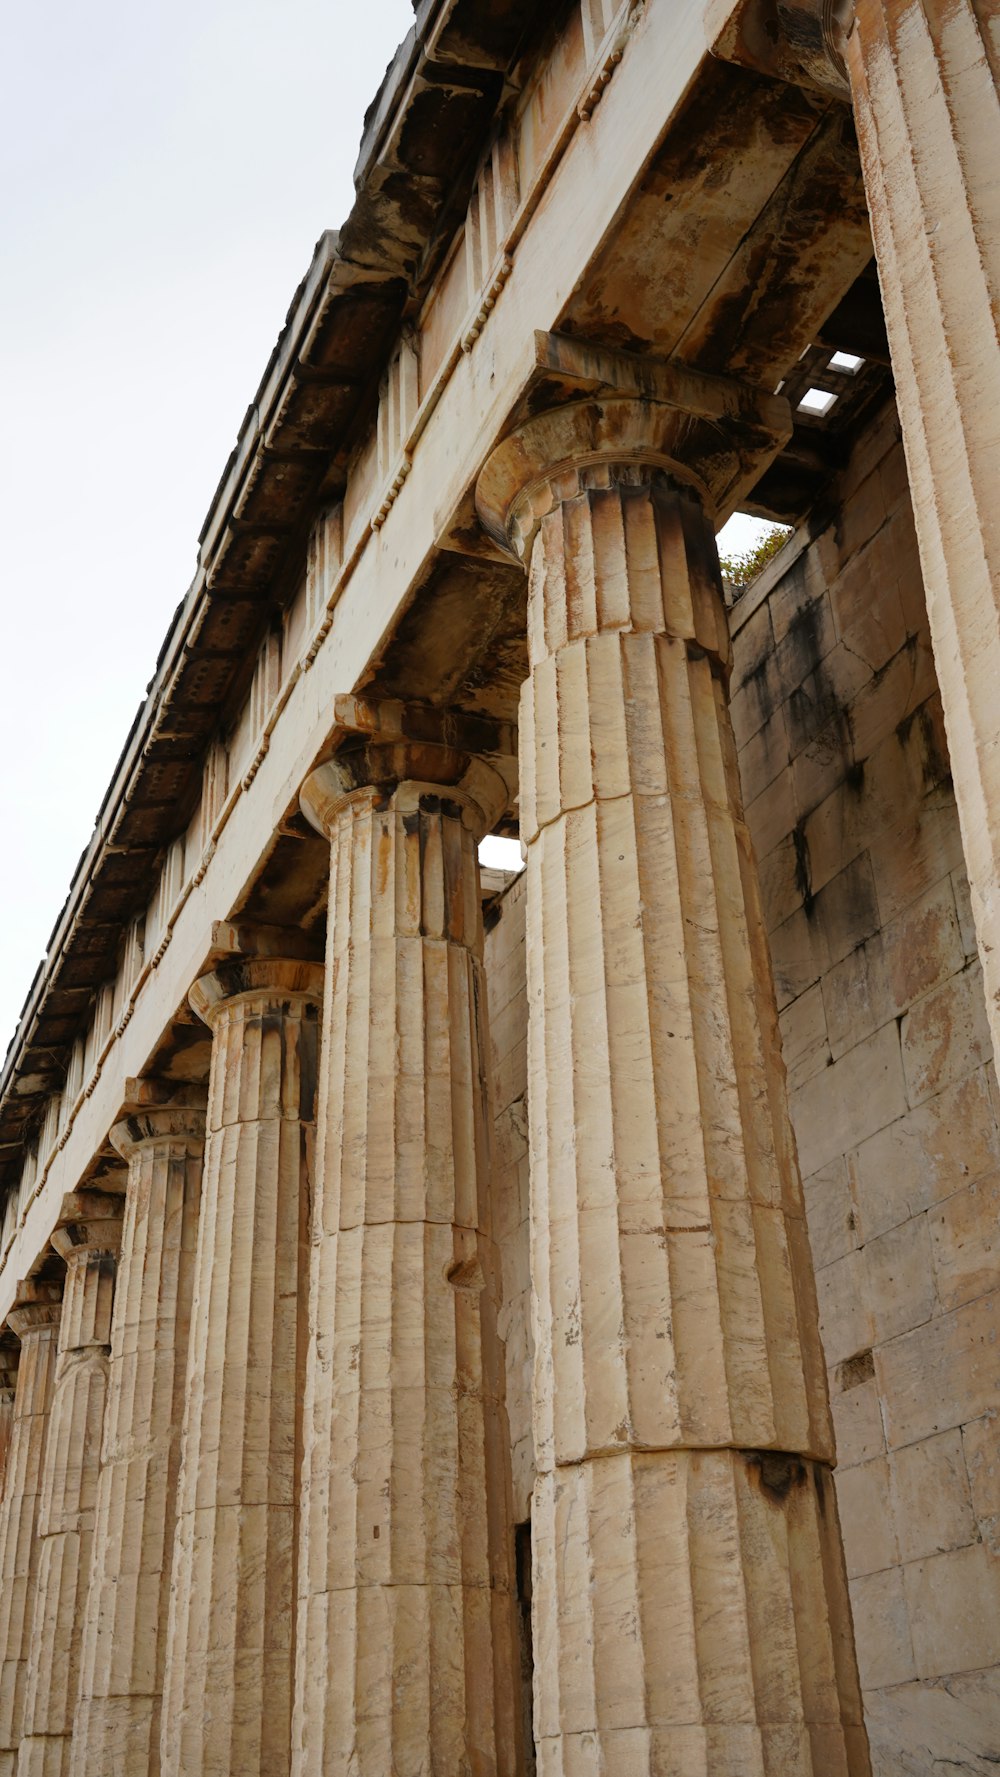 a row of large stone pillars under a bridge